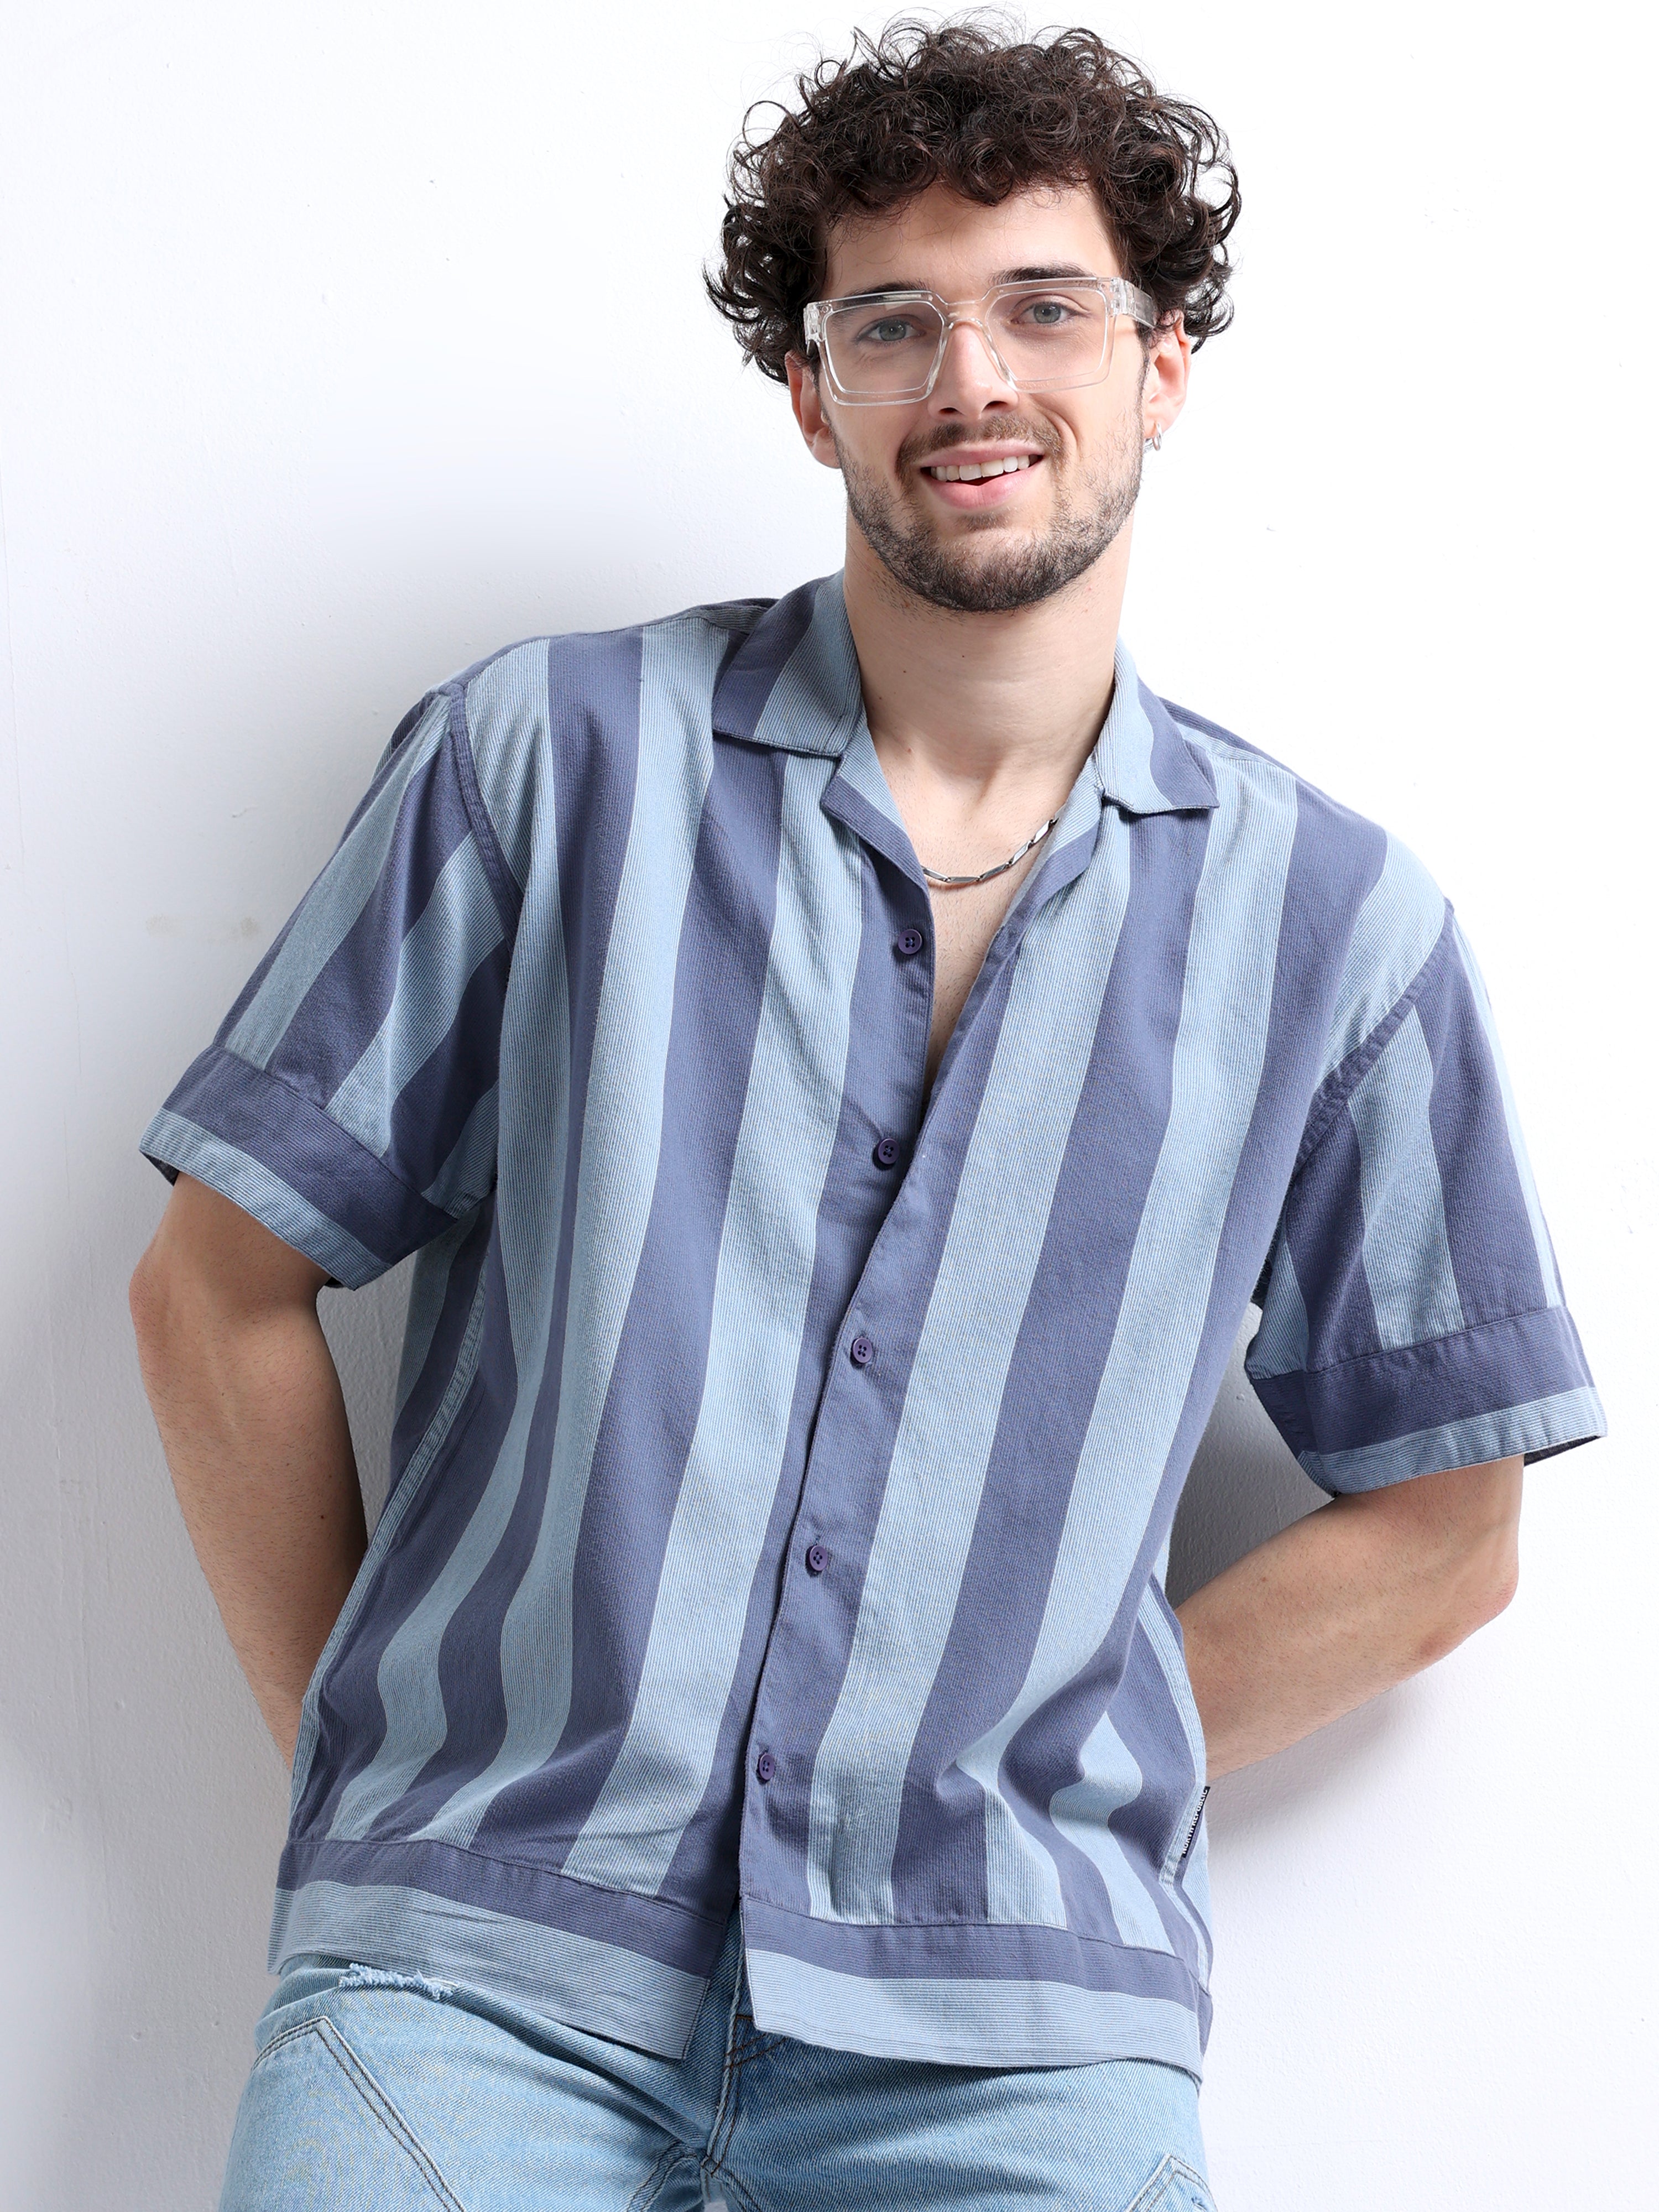 fcity.in - Urbane Denim Half Shirts / Classic Sensational Men Shirts